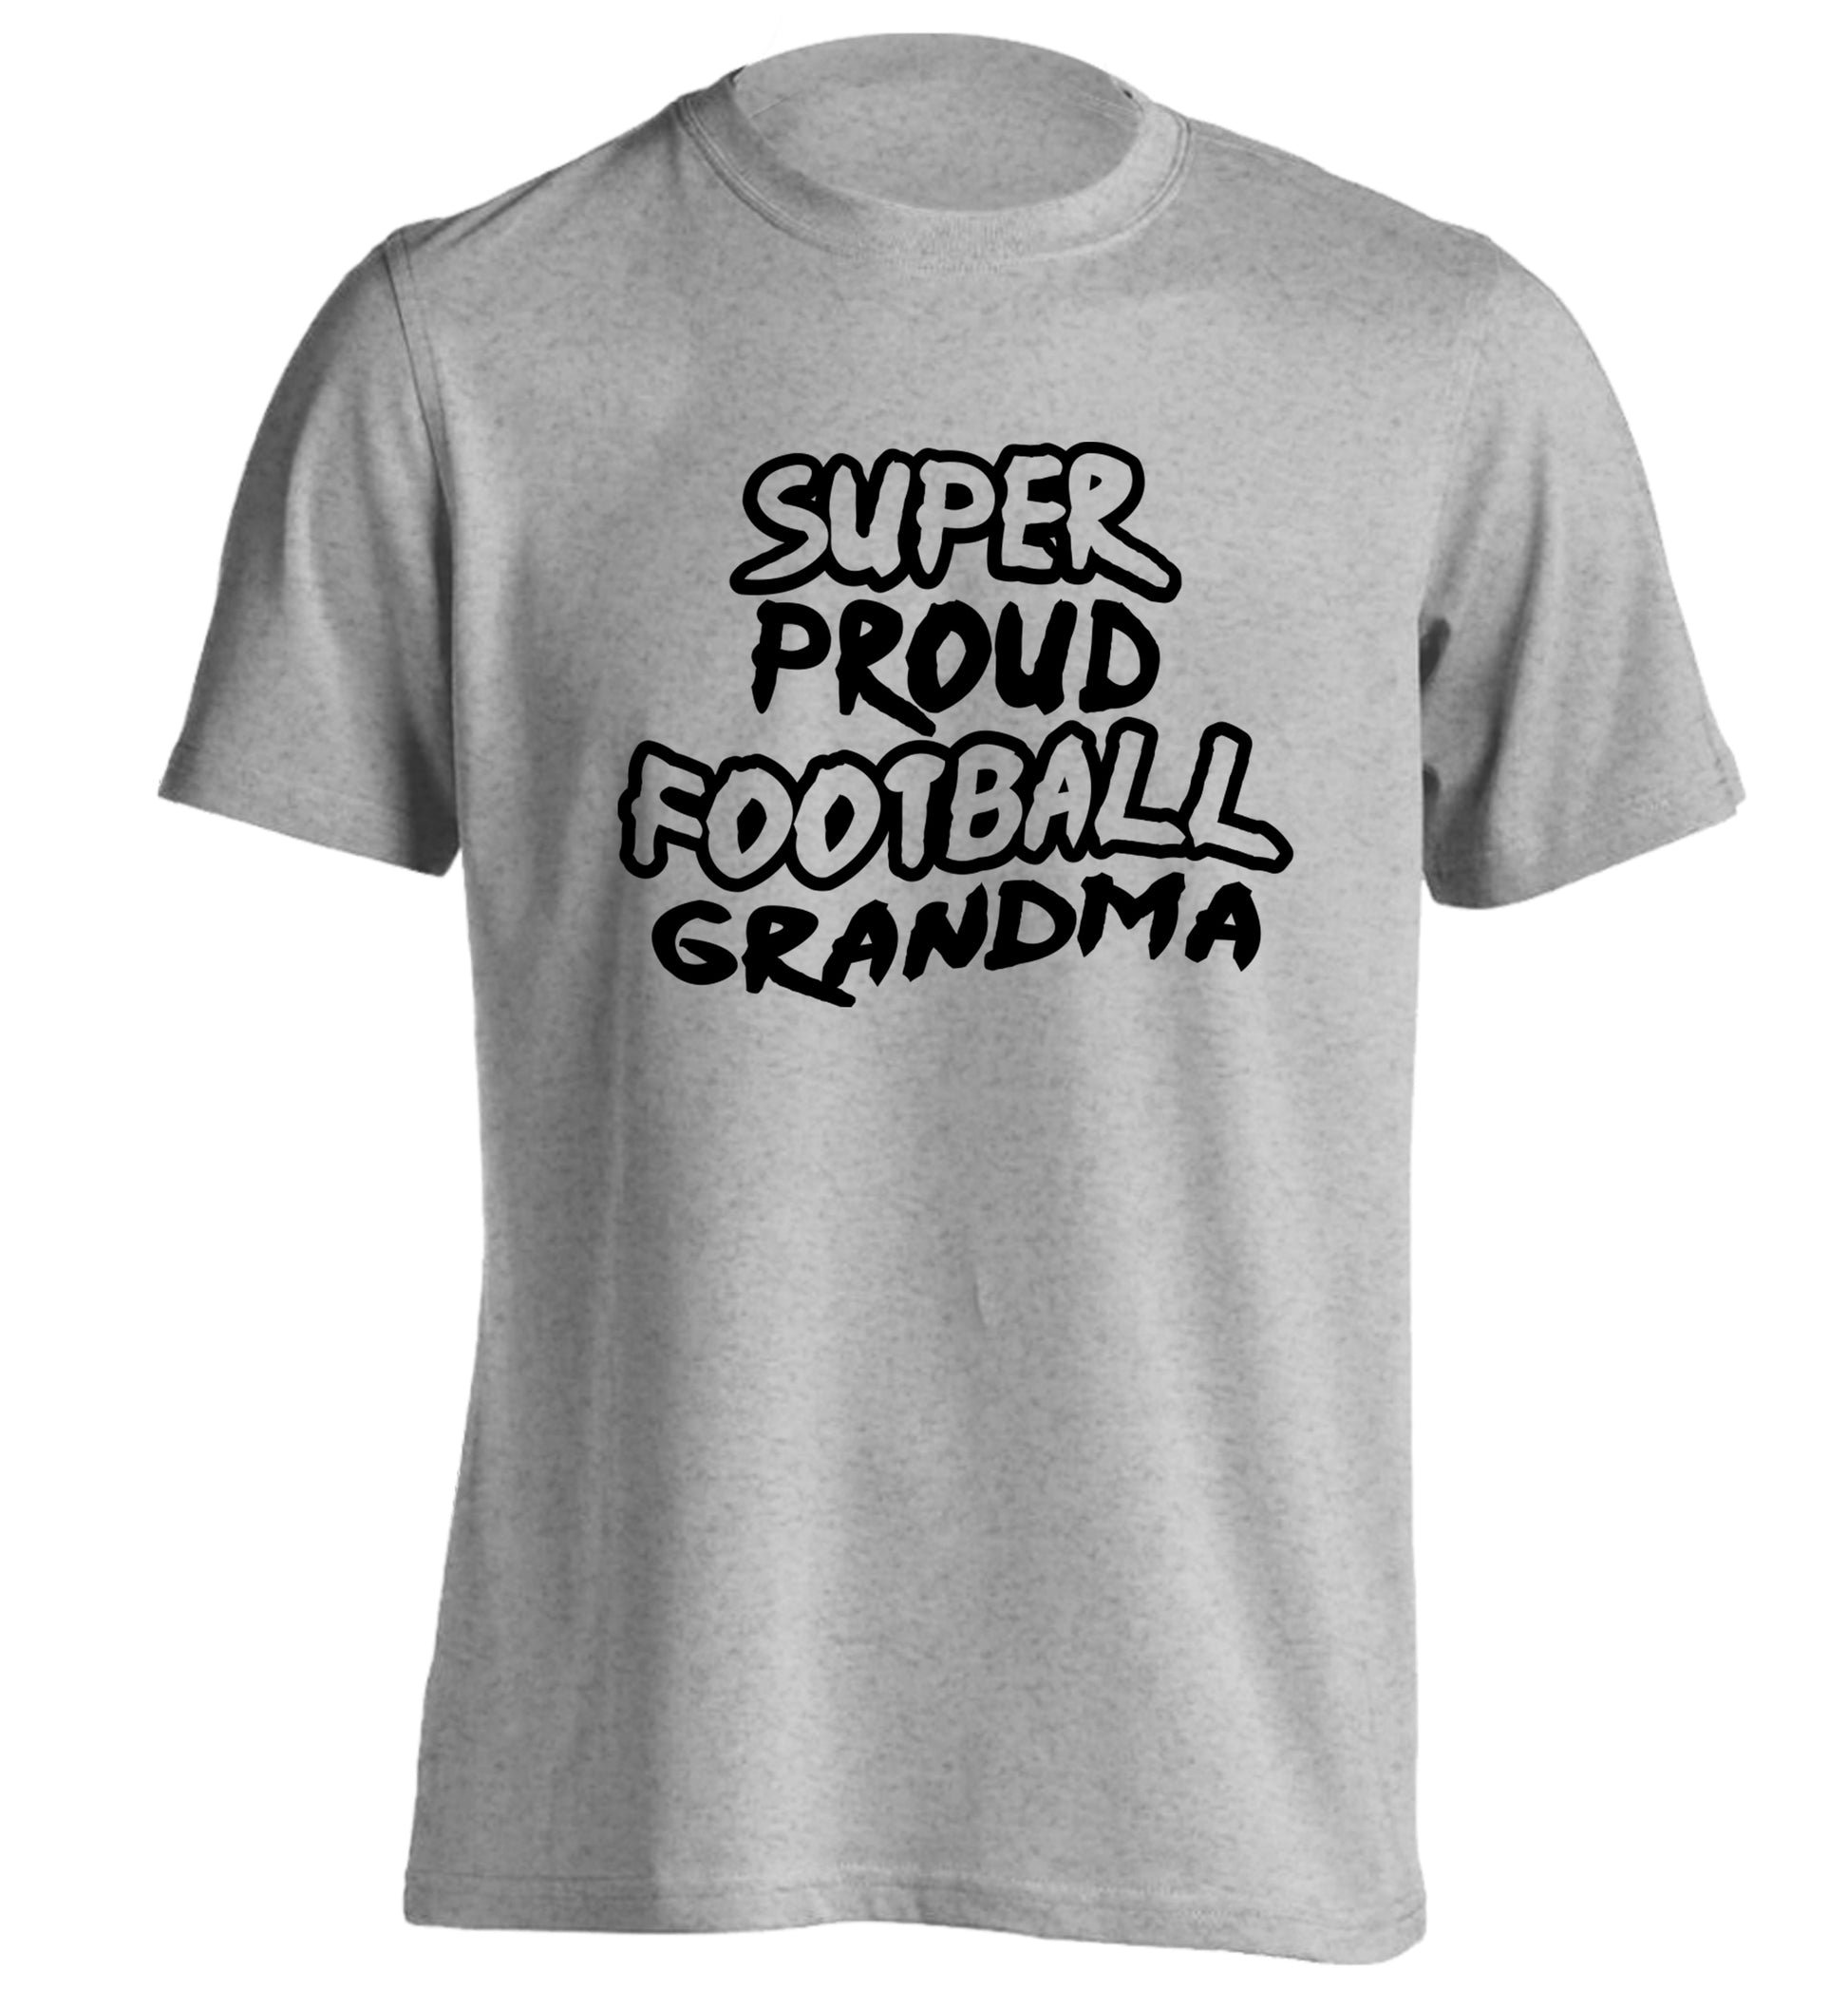 Super proud football grandma adults unisexgrey Tshirt 2XL